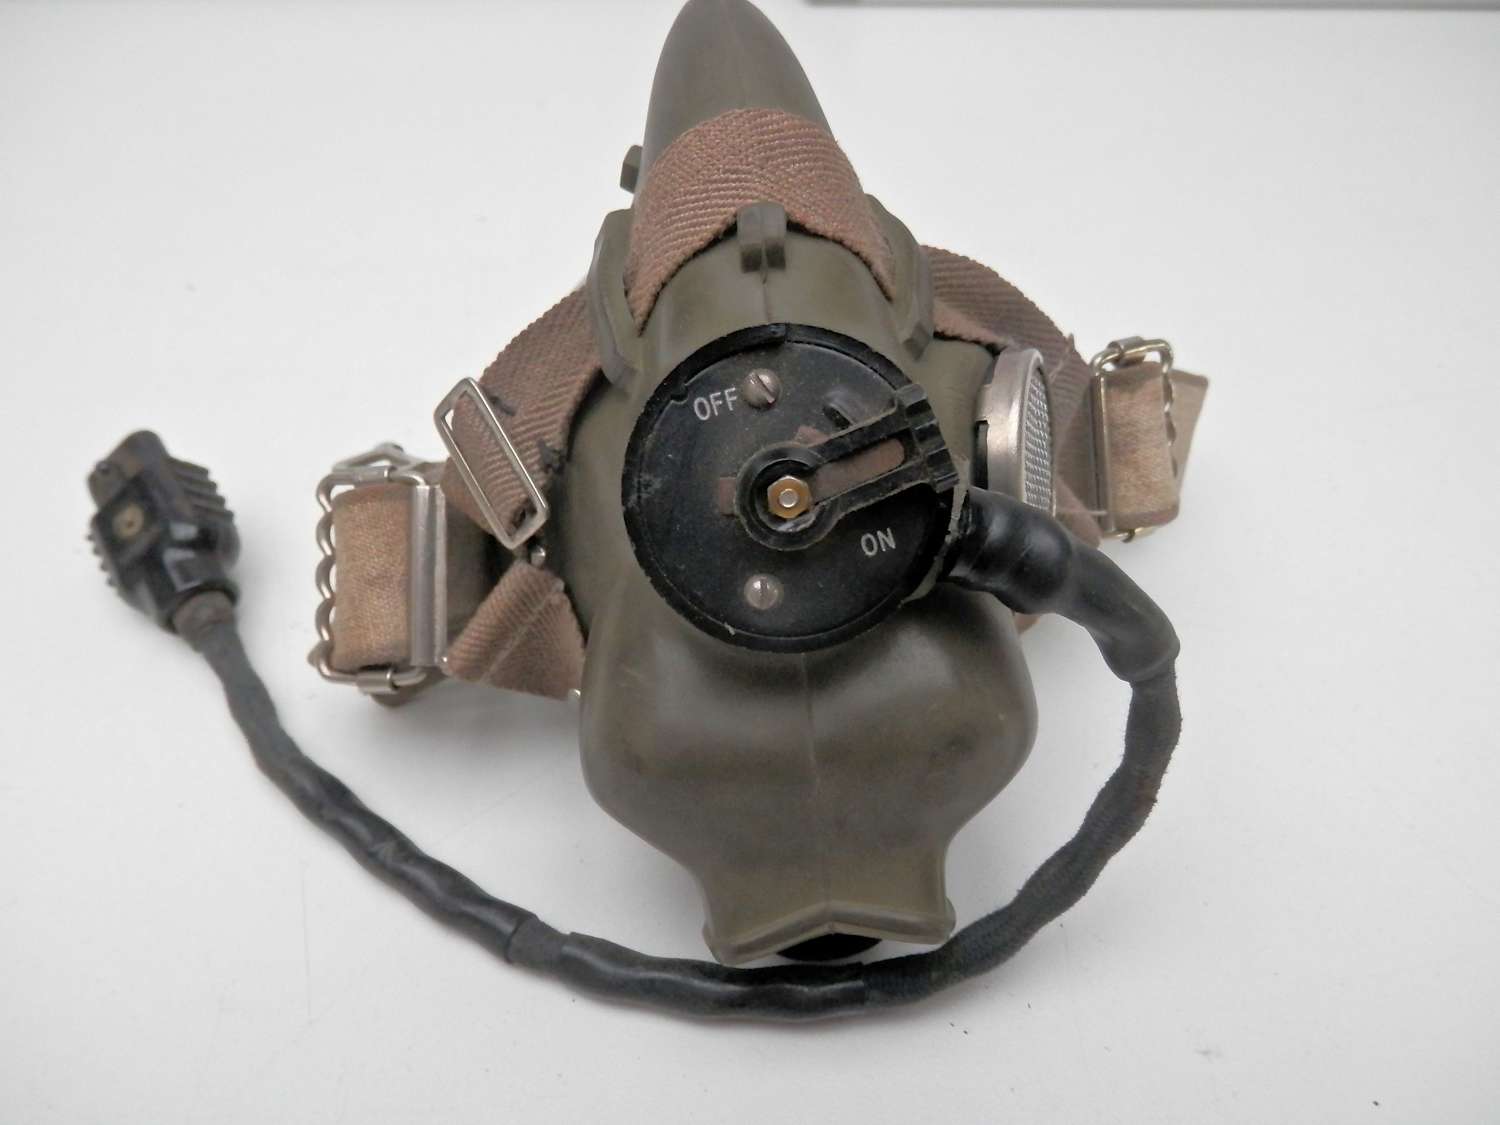 RAF h-type oxygen mask